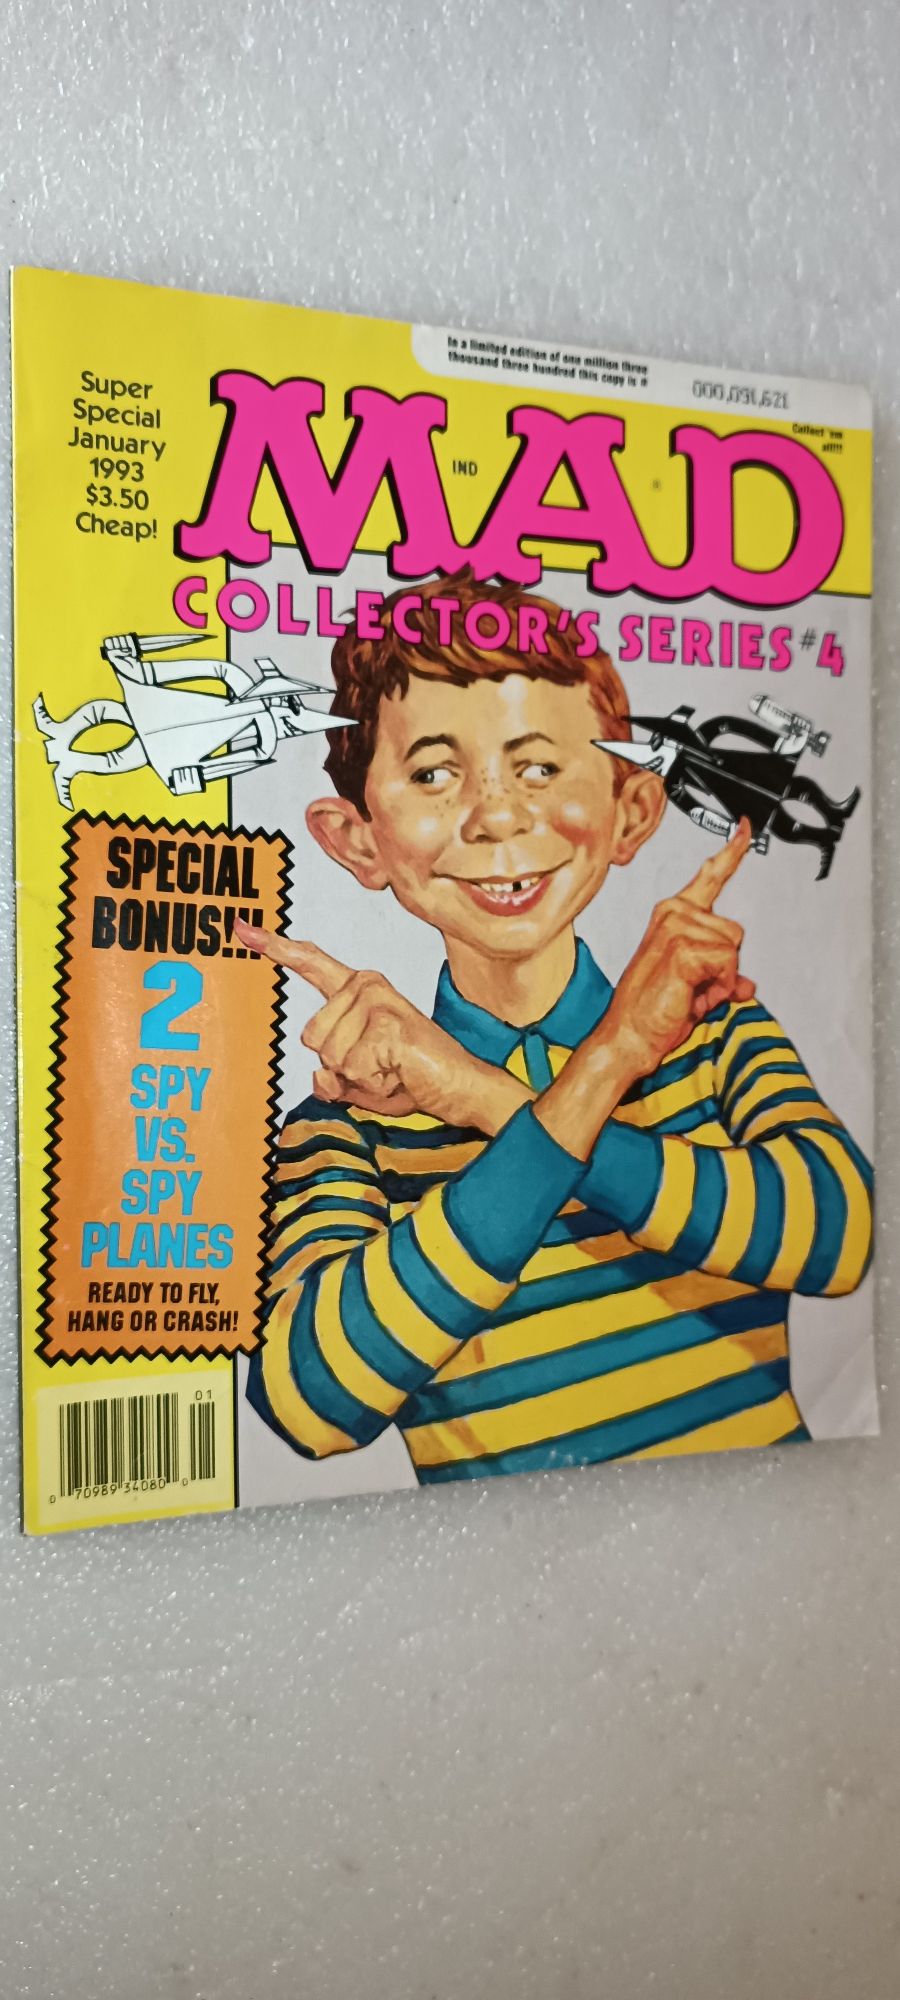 Antiga revista Mad Magazine Super Special #85 (Collectors Series #4